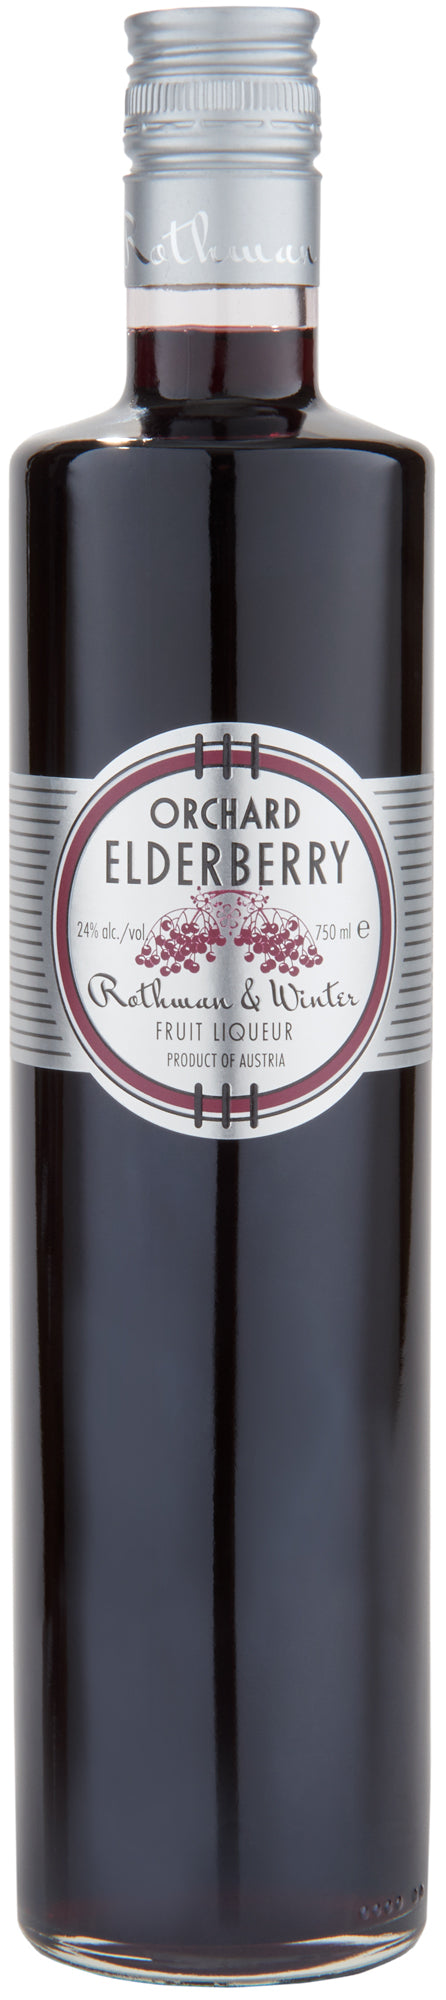 Rothman & Winter Orchard Elderberry Liqueur Austria